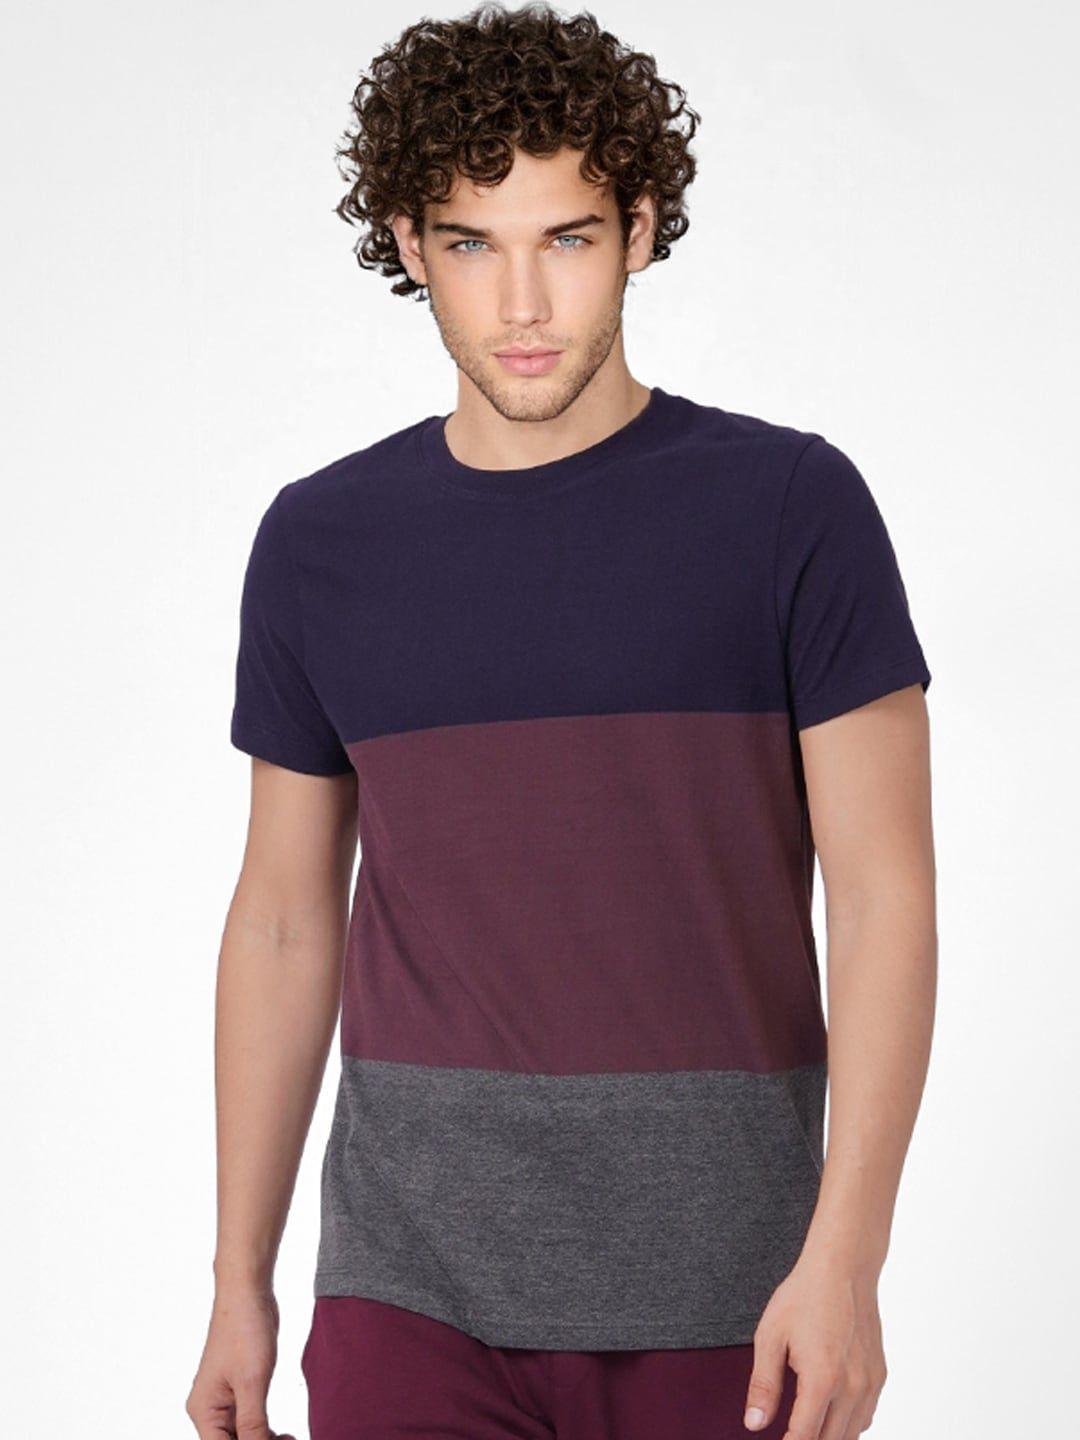 jack & jones men blue & burgundy colourblocked cotton t-shirt